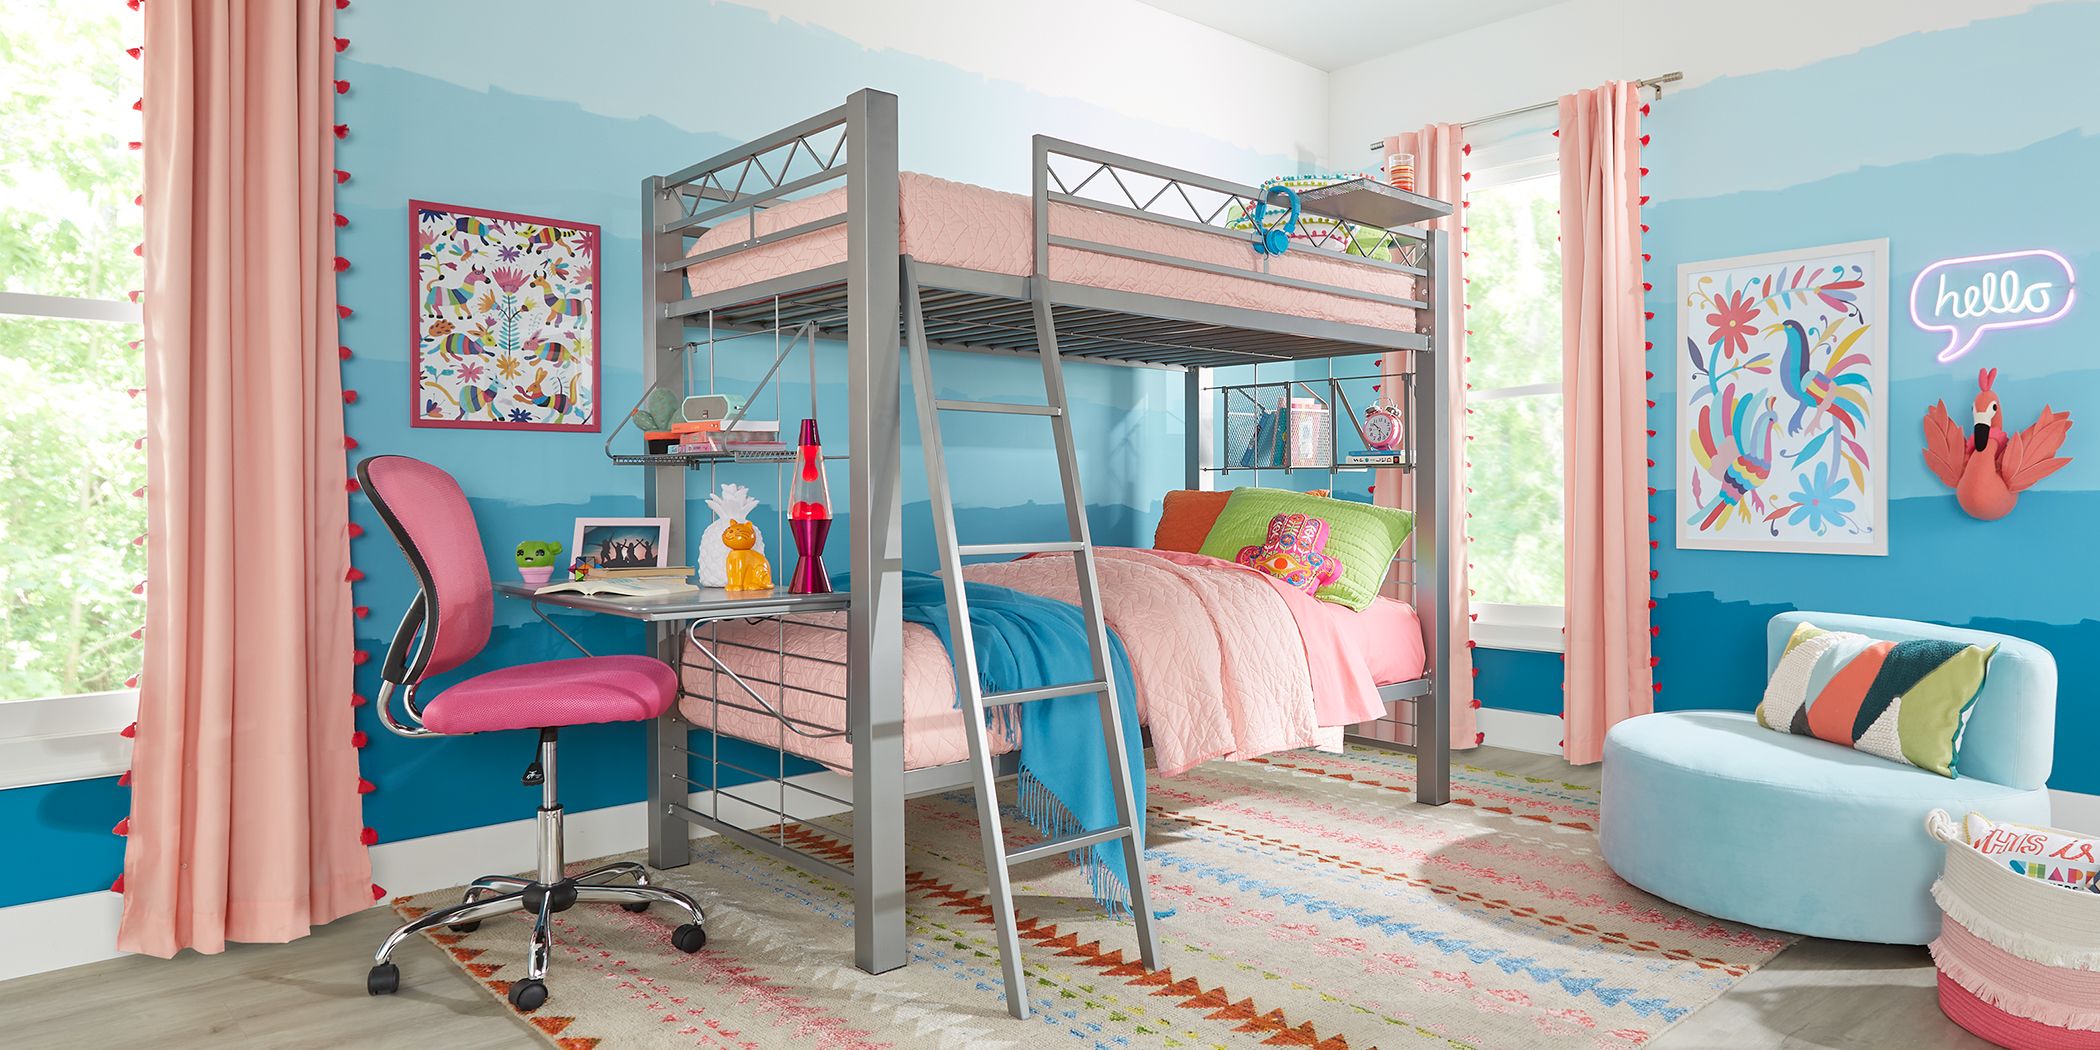 cheap bunk beds for girls